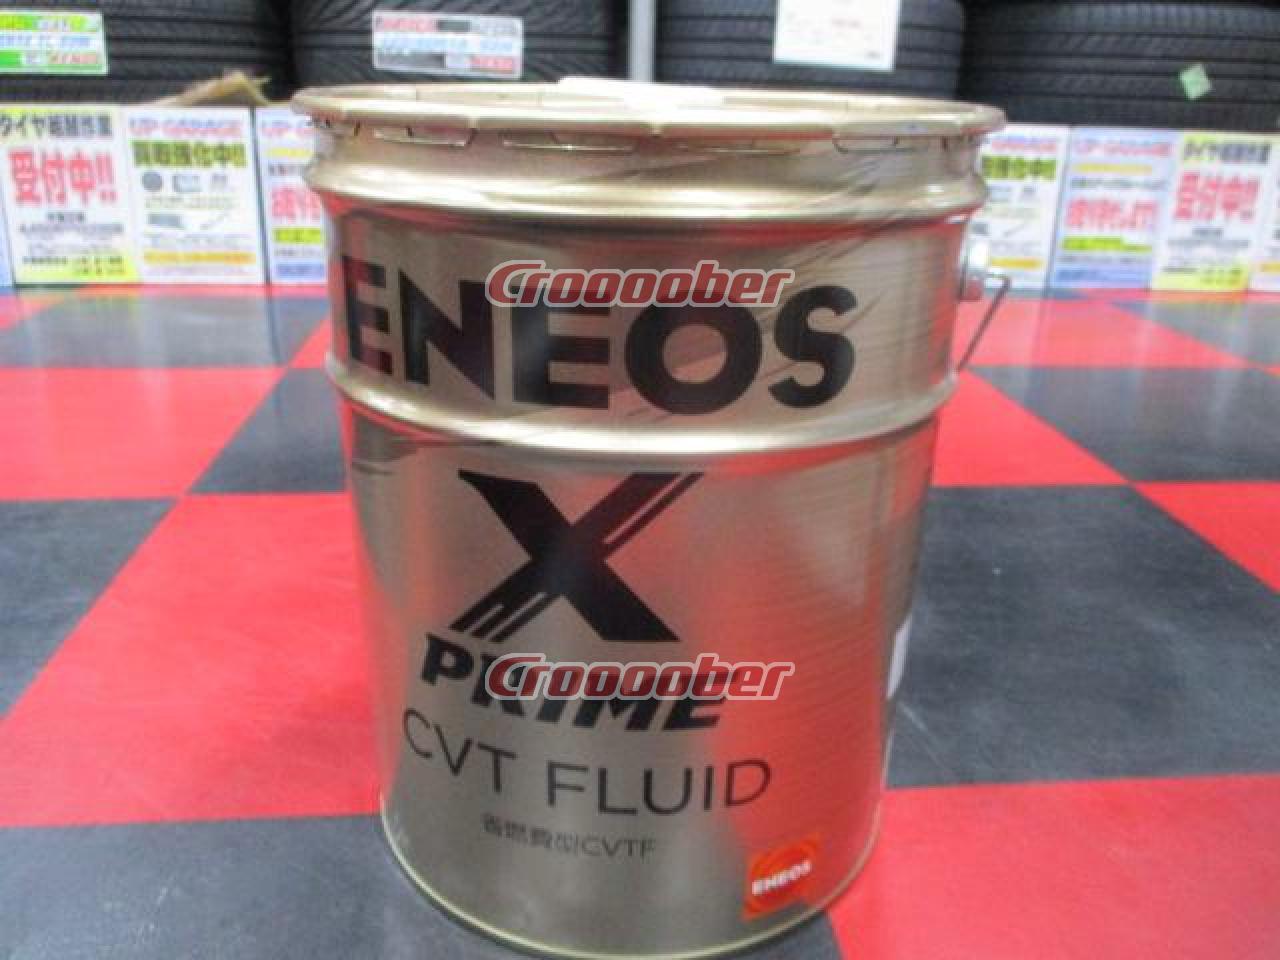 ENEOS X-PRIME CVT FULID | Lubricants | Croooober